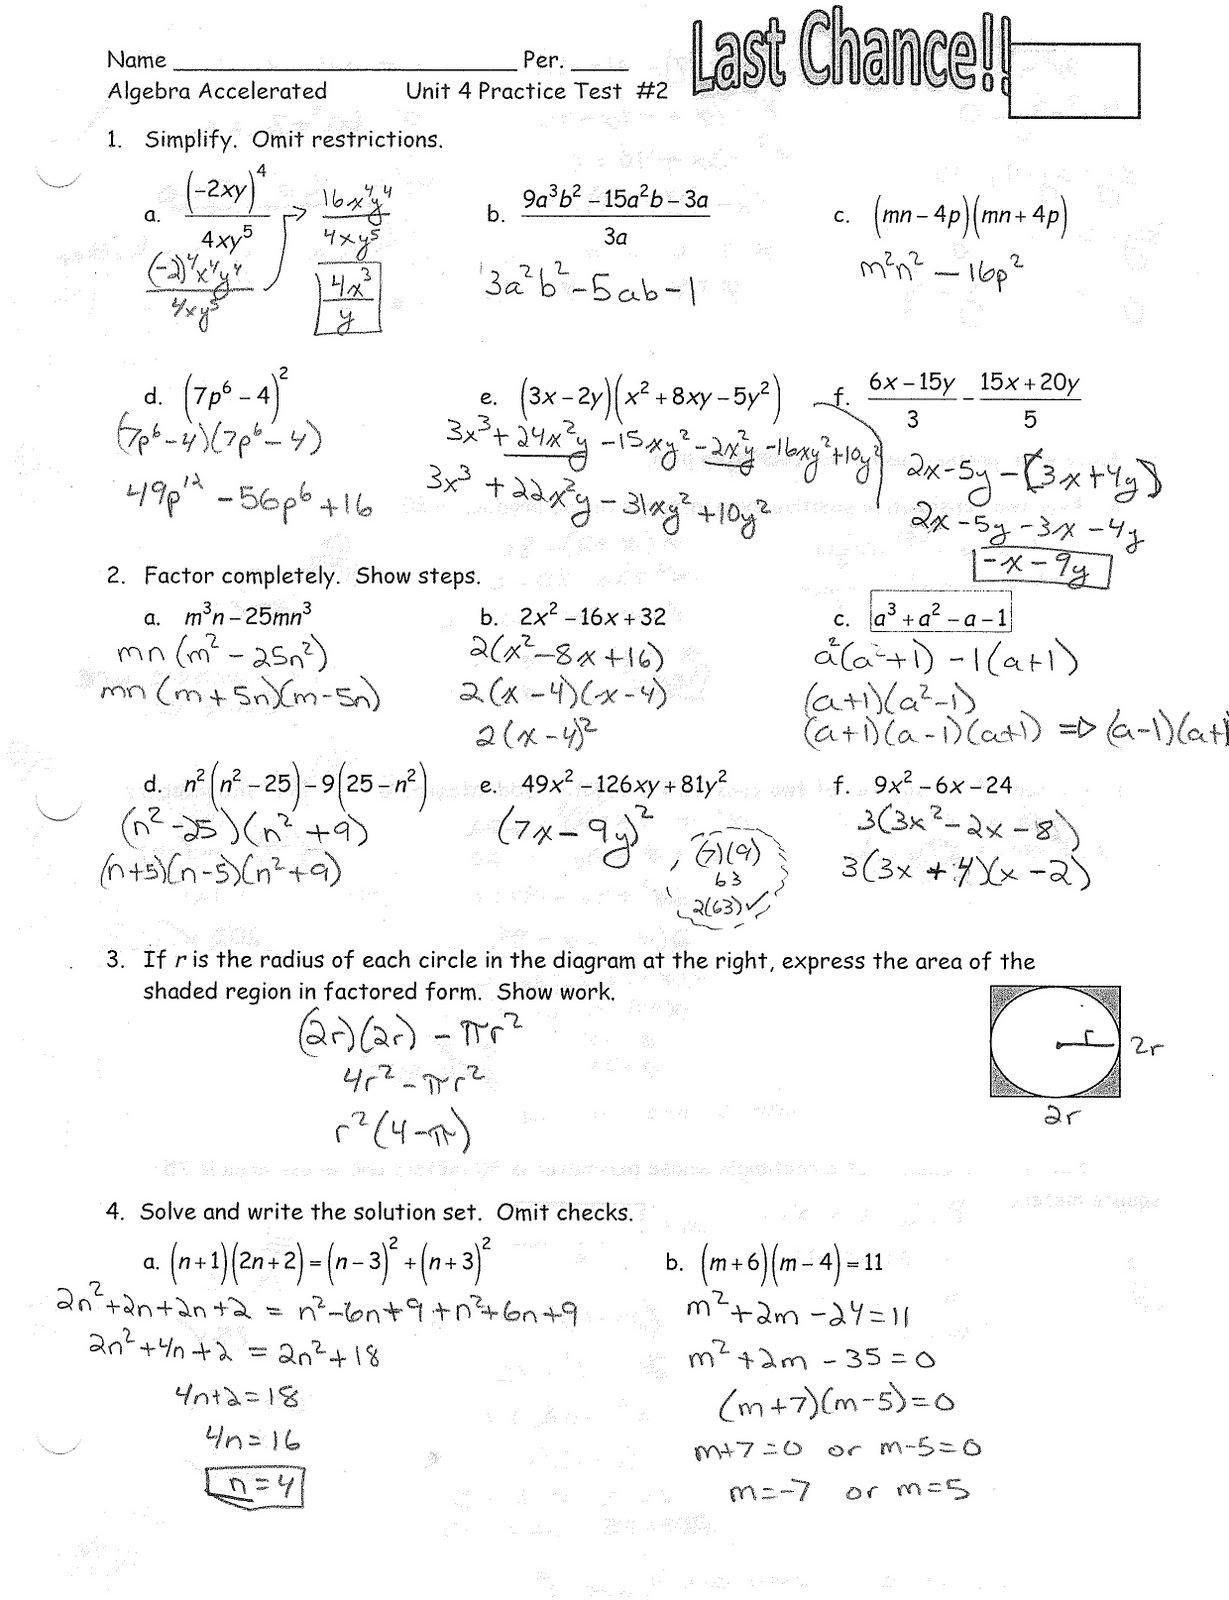 Iroquois Algebra Blog: Unit 4 Practice Test #2 Answer Key ...